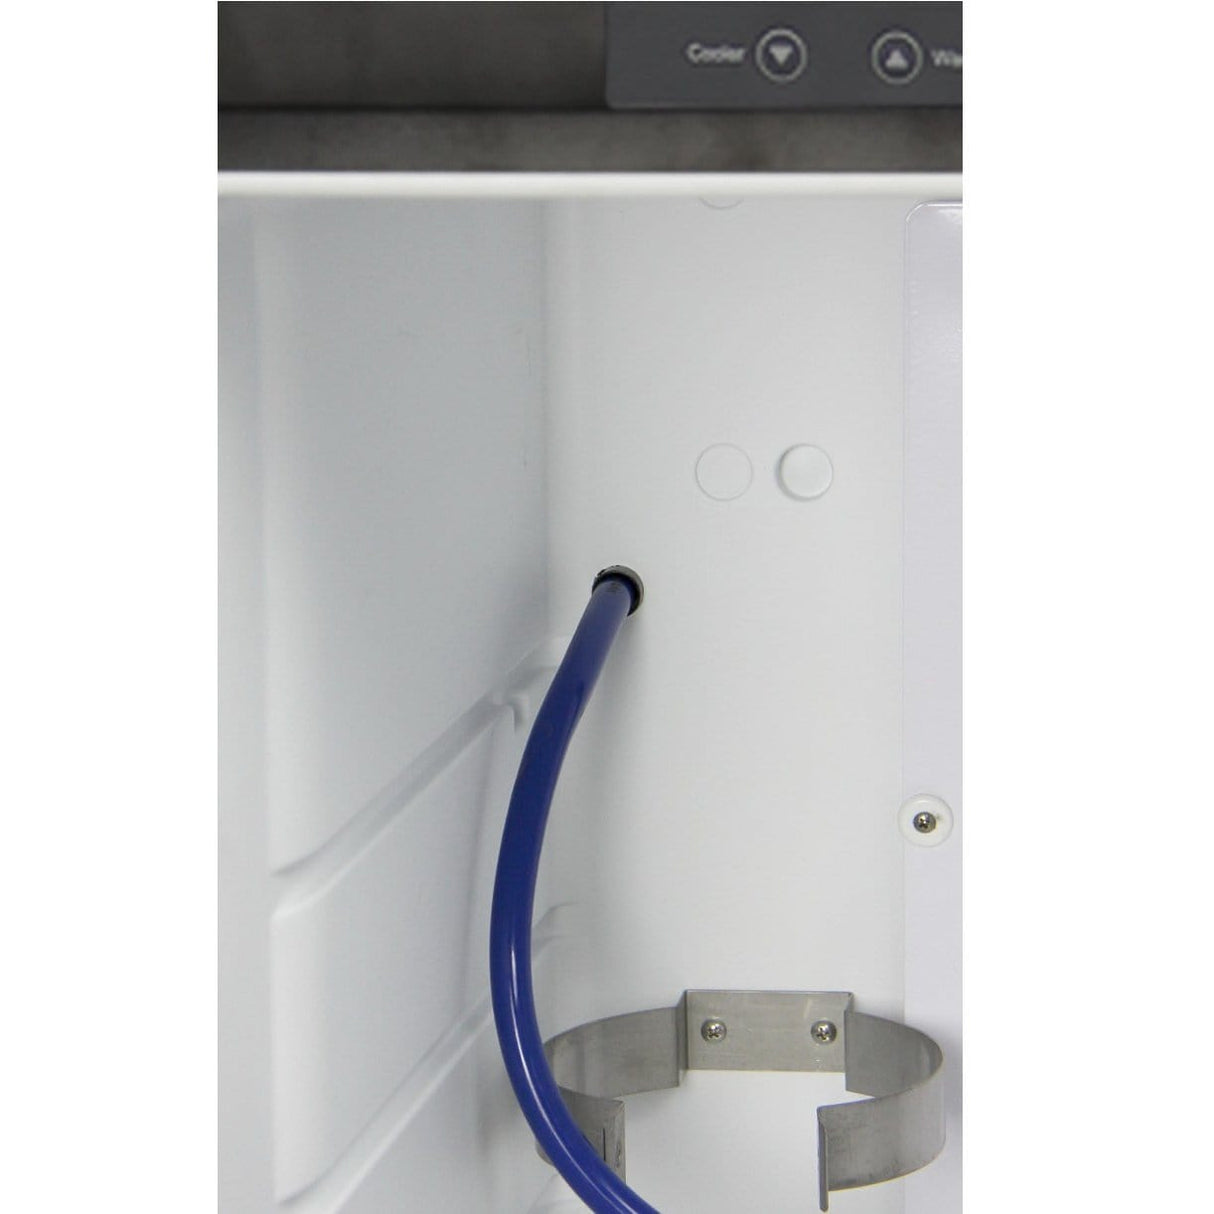 Kegco Three Keg Tap Faucet Digital Kegerator - Black Matte Cabinet and Stainless Steel Door (K309X-3NK)